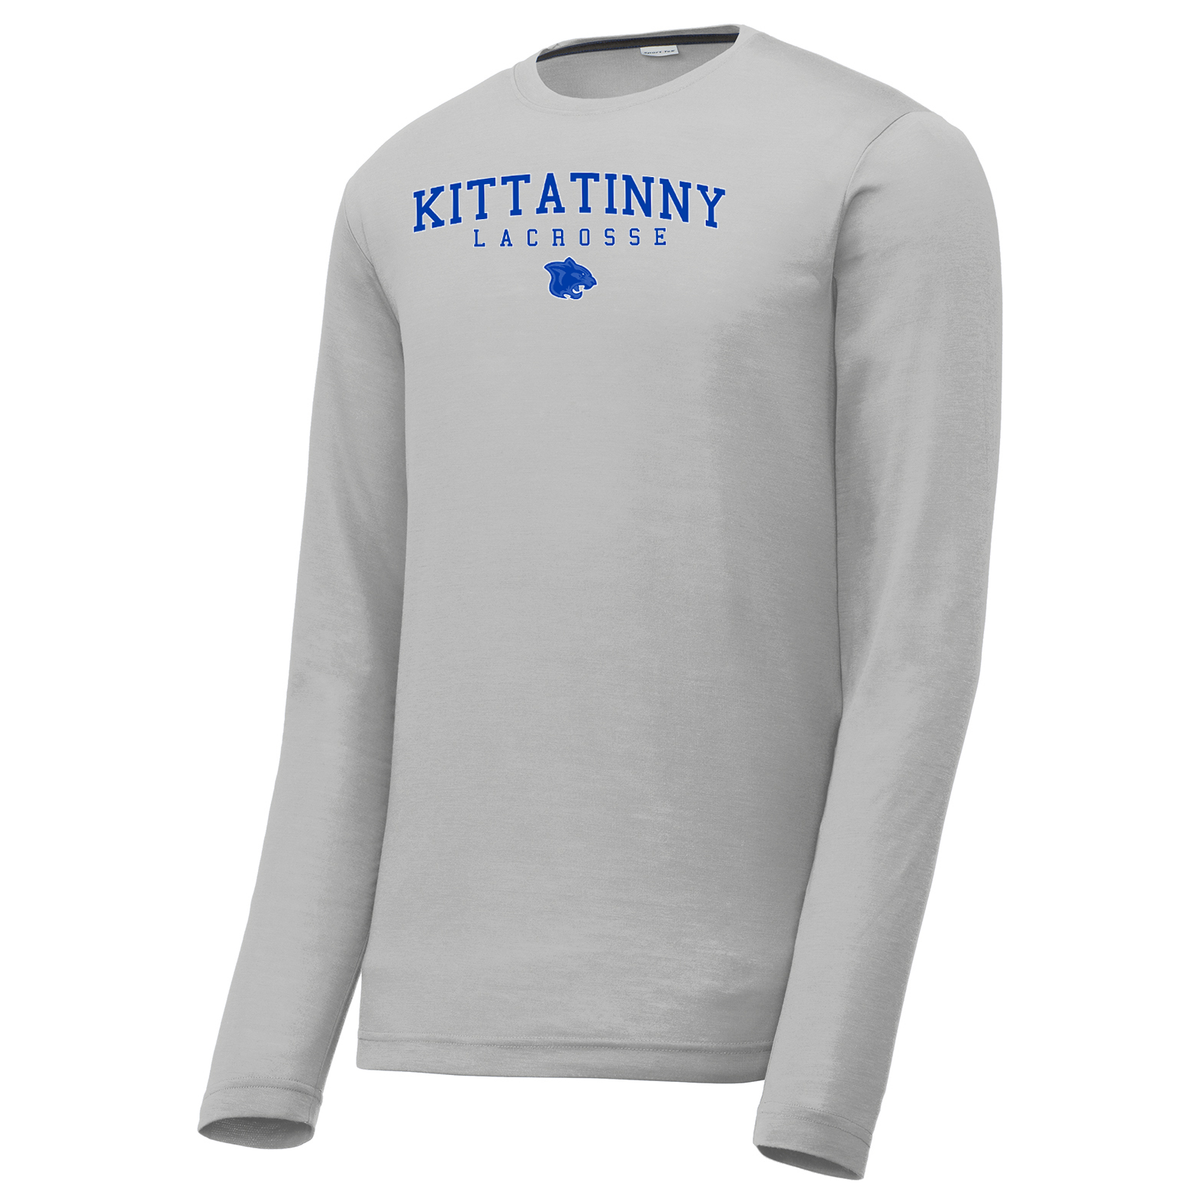 Kittatinny Lacrosse Long Sleeve CottonTouch Performance Shirt